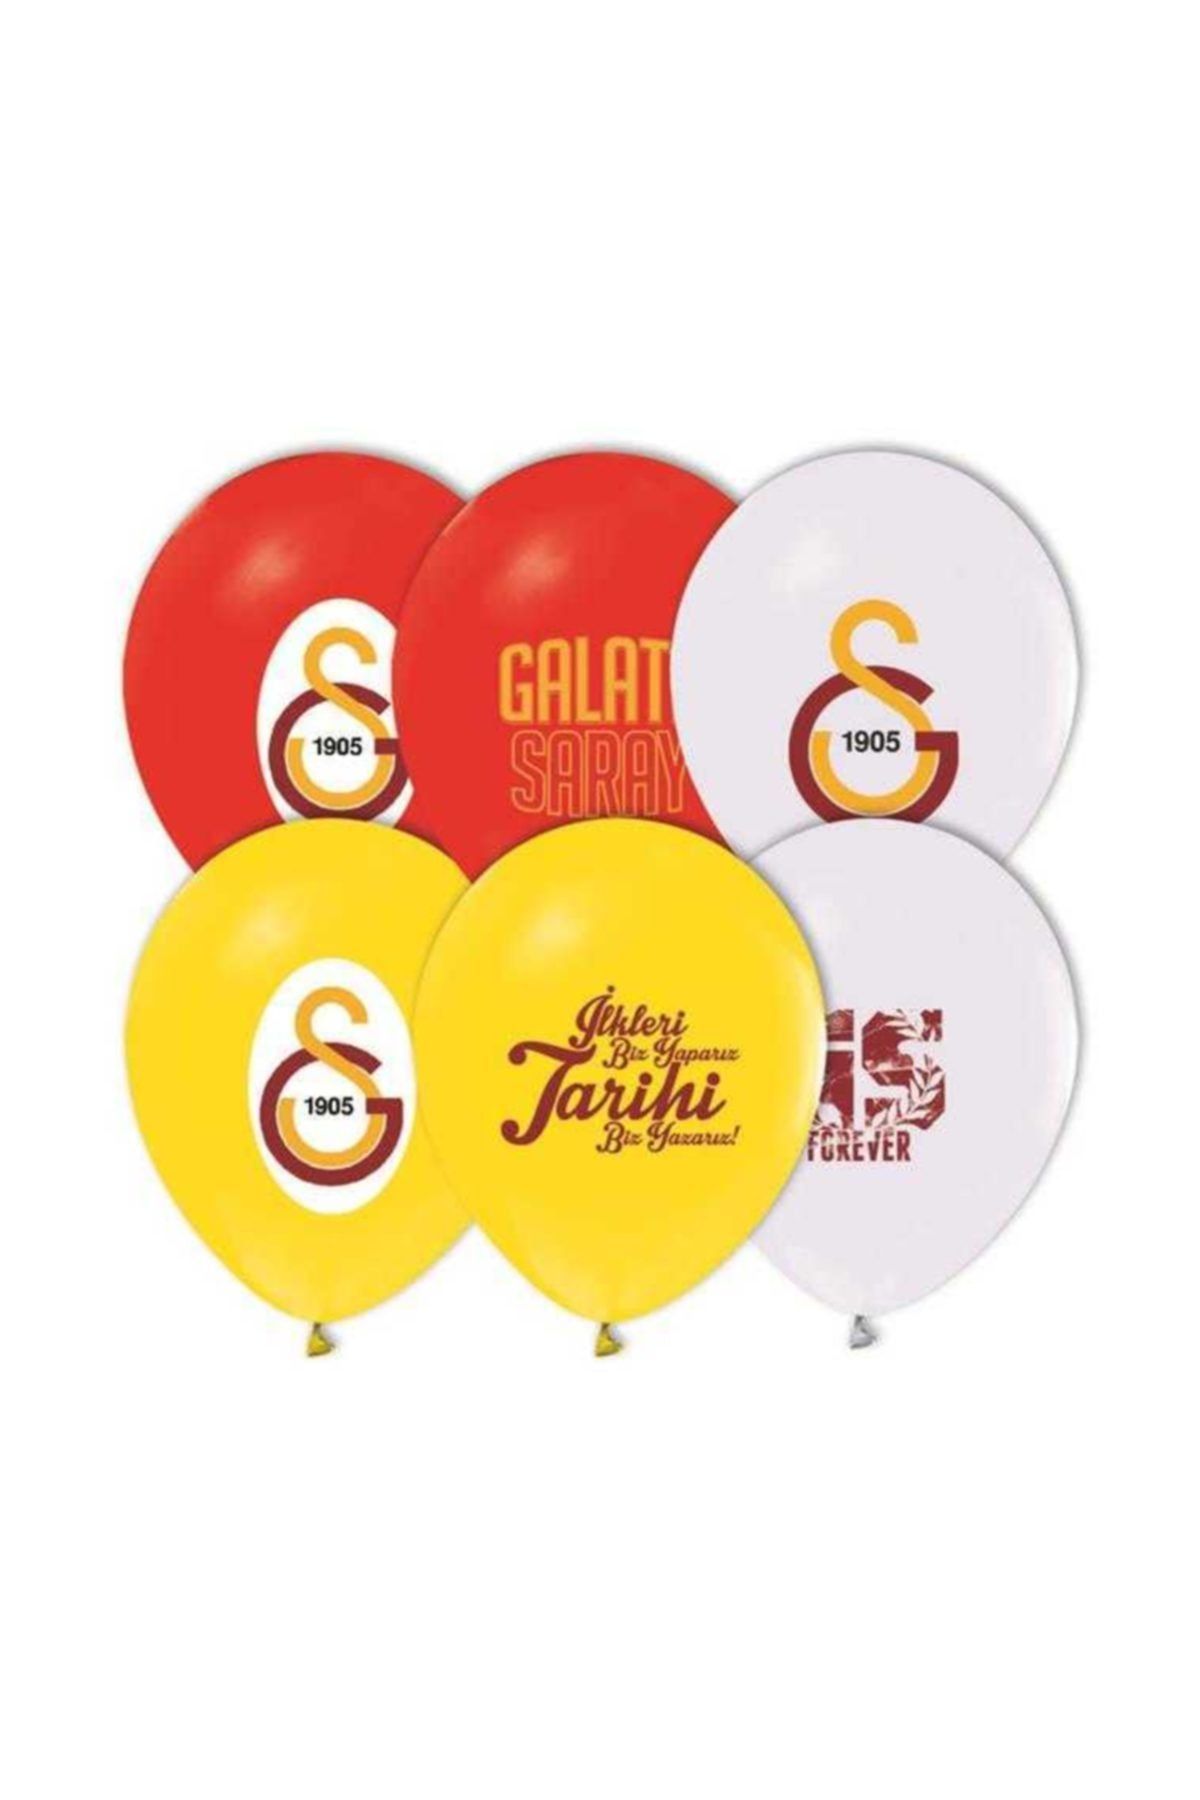 kidspartim Galatasaray Baskili Renkli Balon 8 Li